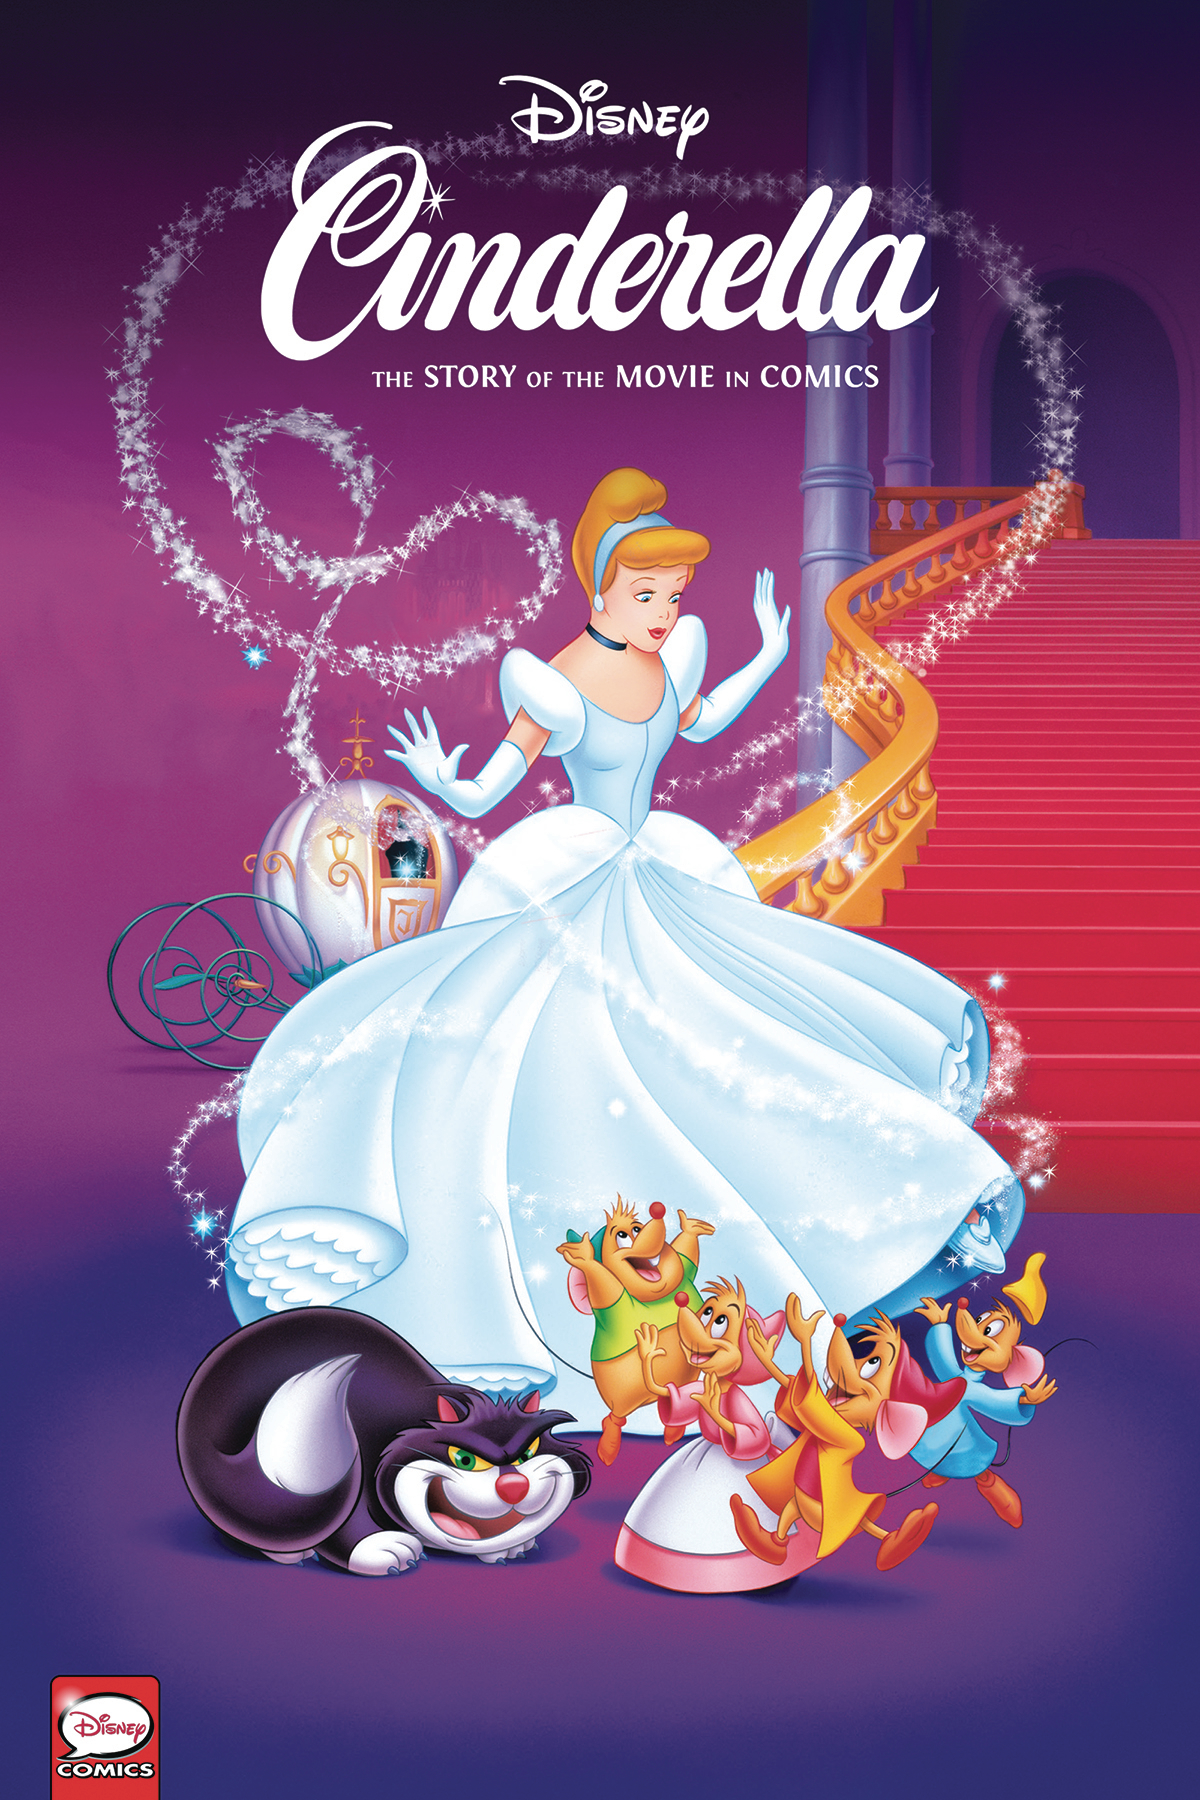 Disney Cinderella Story of Movies In Comics Hardcover